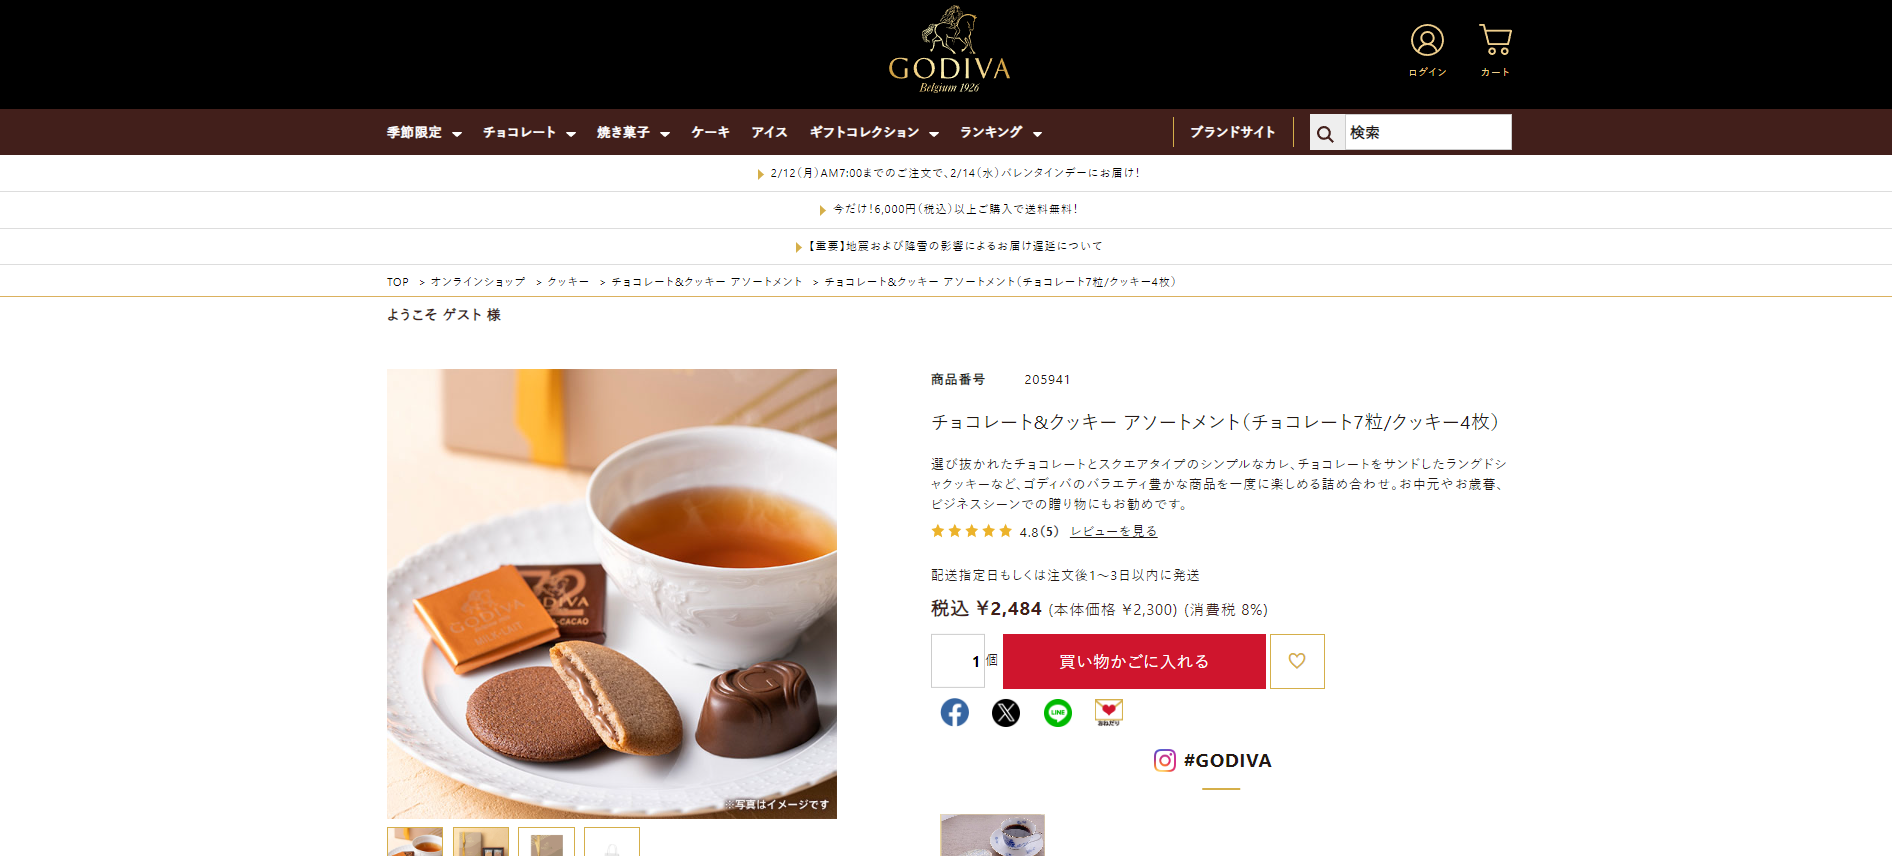 1.GODIVA「チョコレート&クッキー アソートメント」